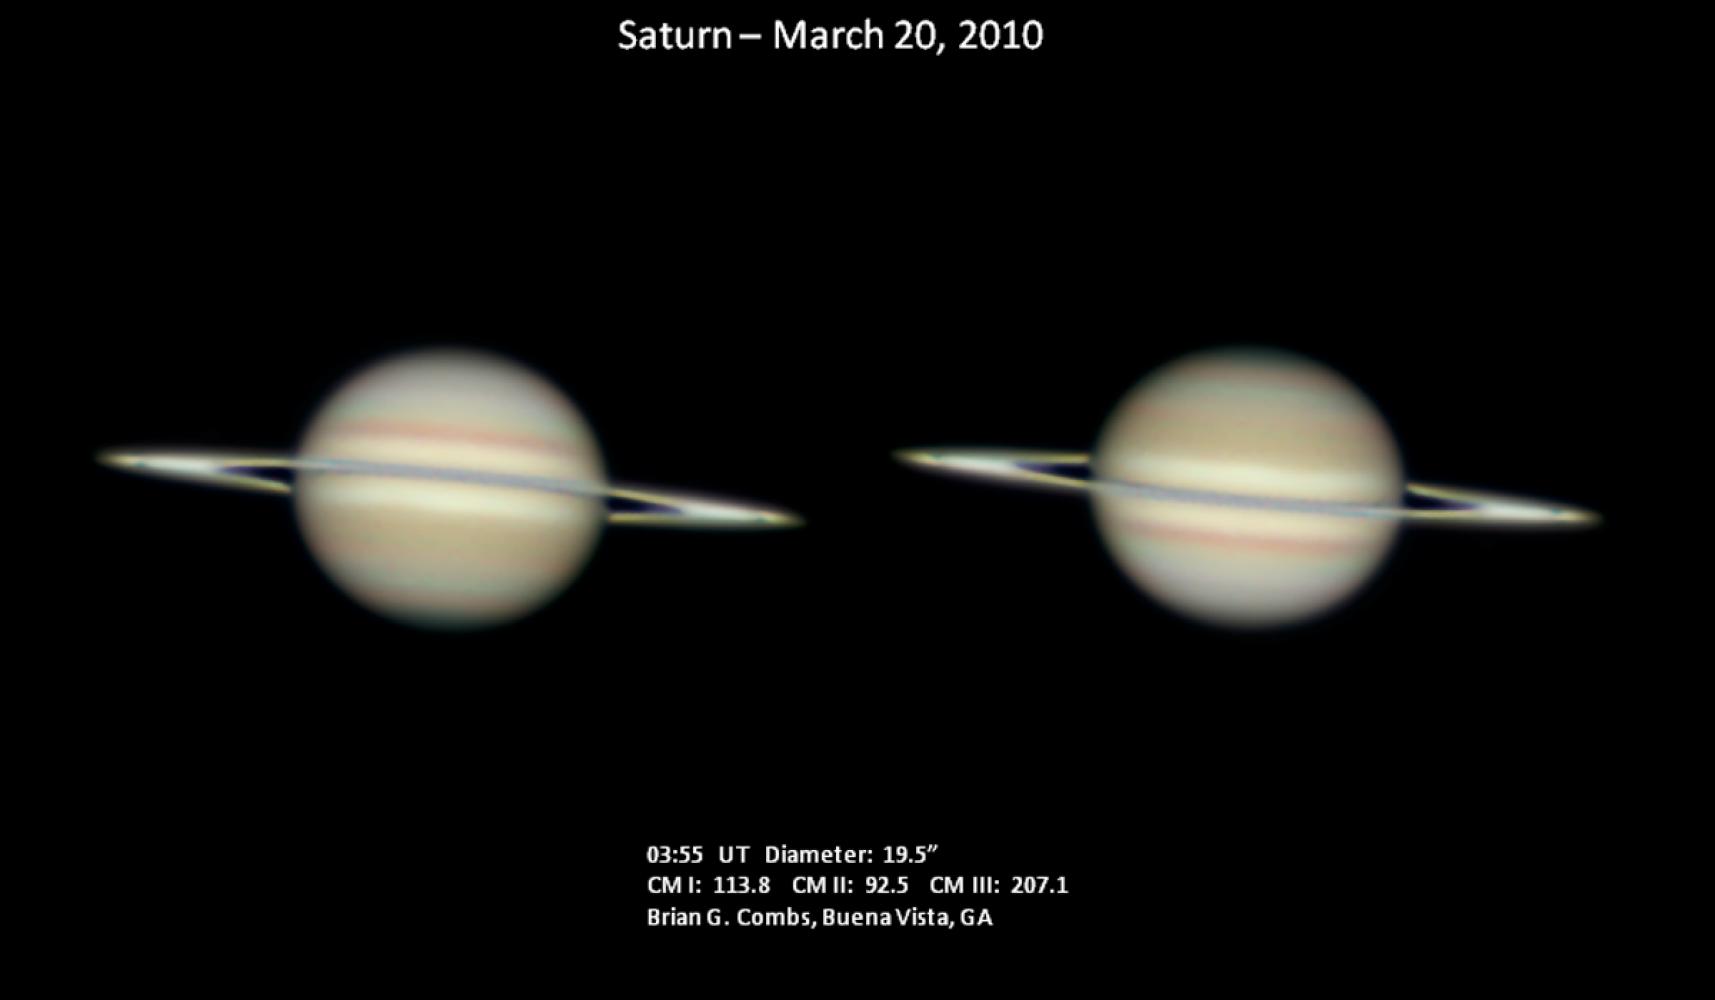 Saturn - March 20, 2010